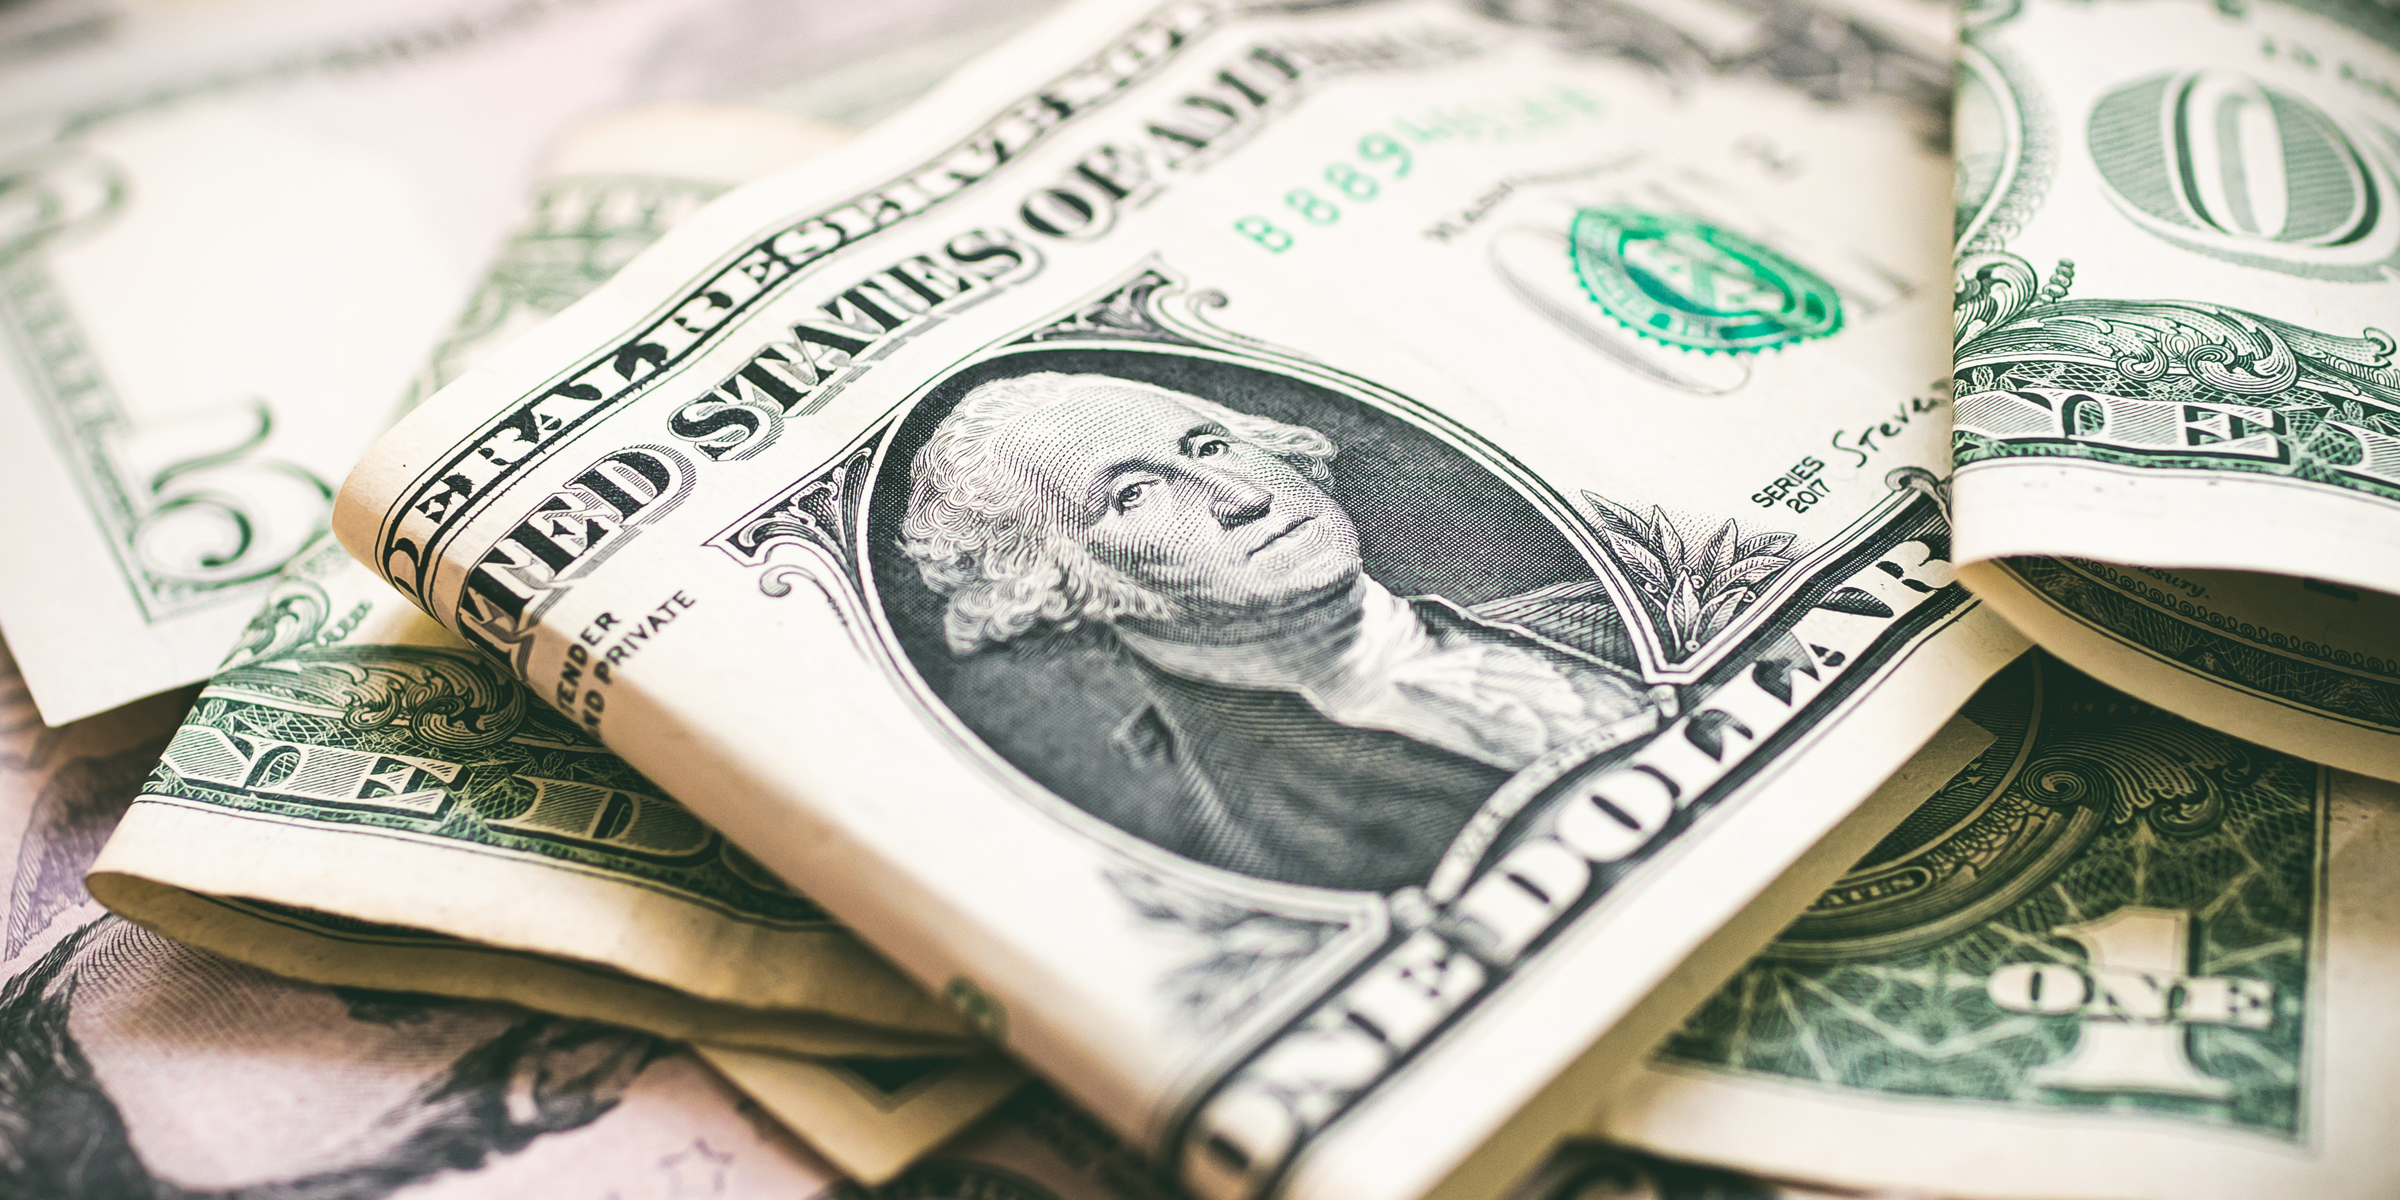 Folded dollar bills | Source: Shutterstock